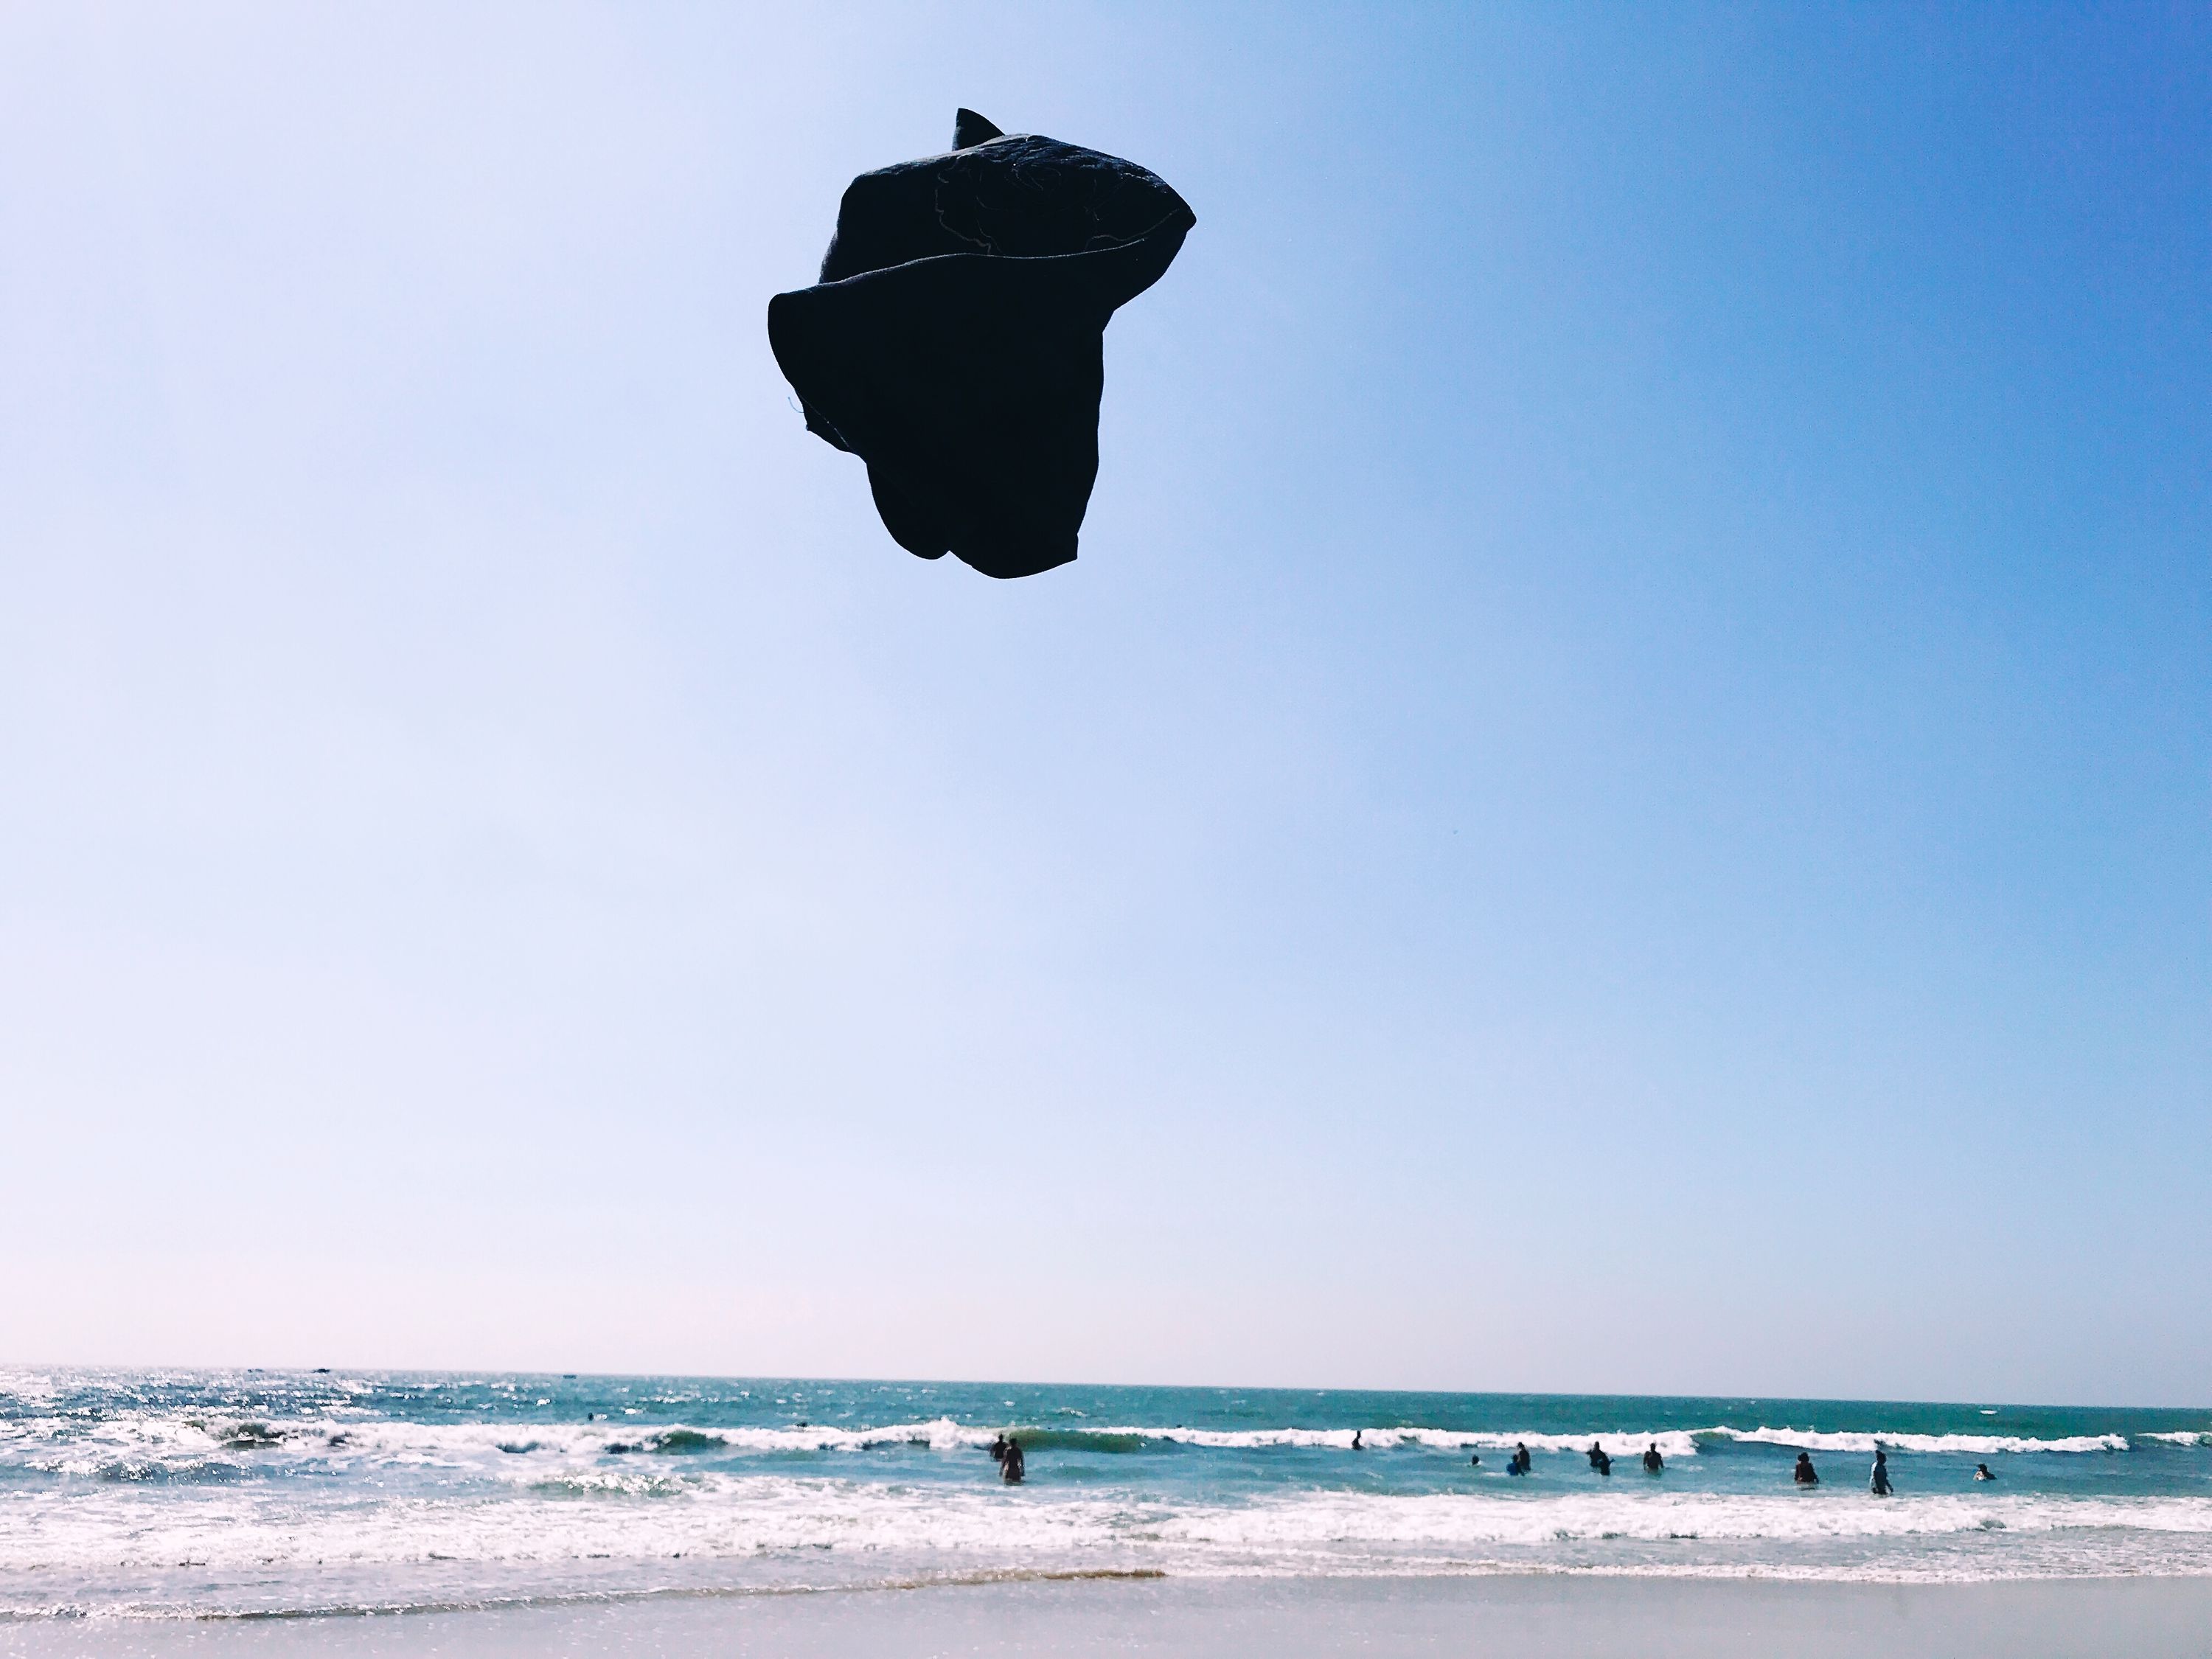 T-shirt flying at the beach. Goa, India. February 2019. Taken w iPhone 7.